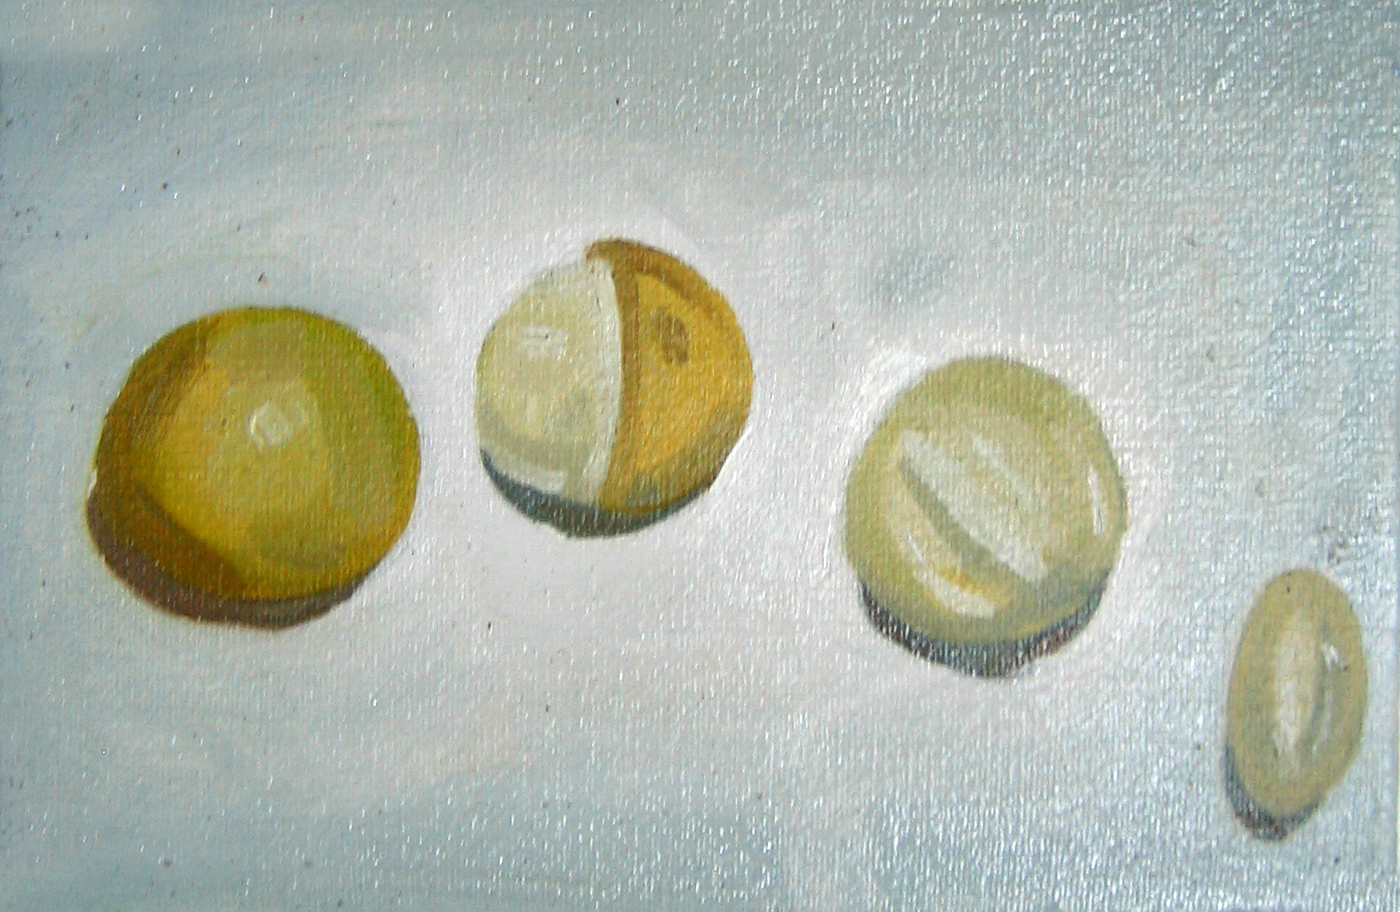 2008, 13x20cm, oil on canvas